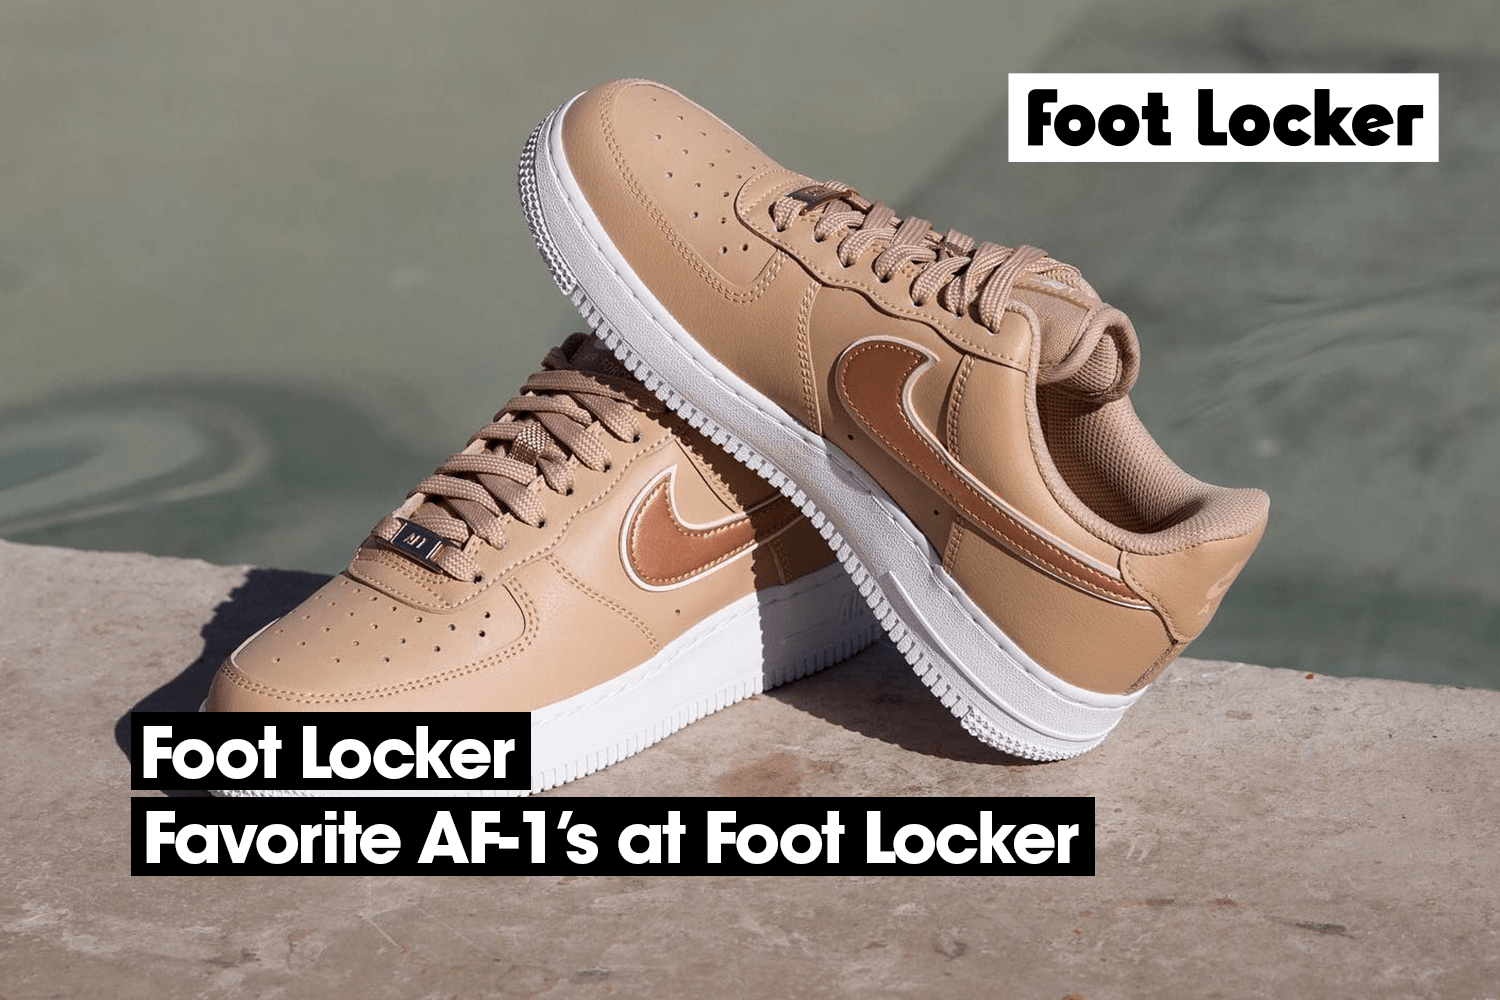 The best Nike Air Force 1 sneakers at Foot Locker